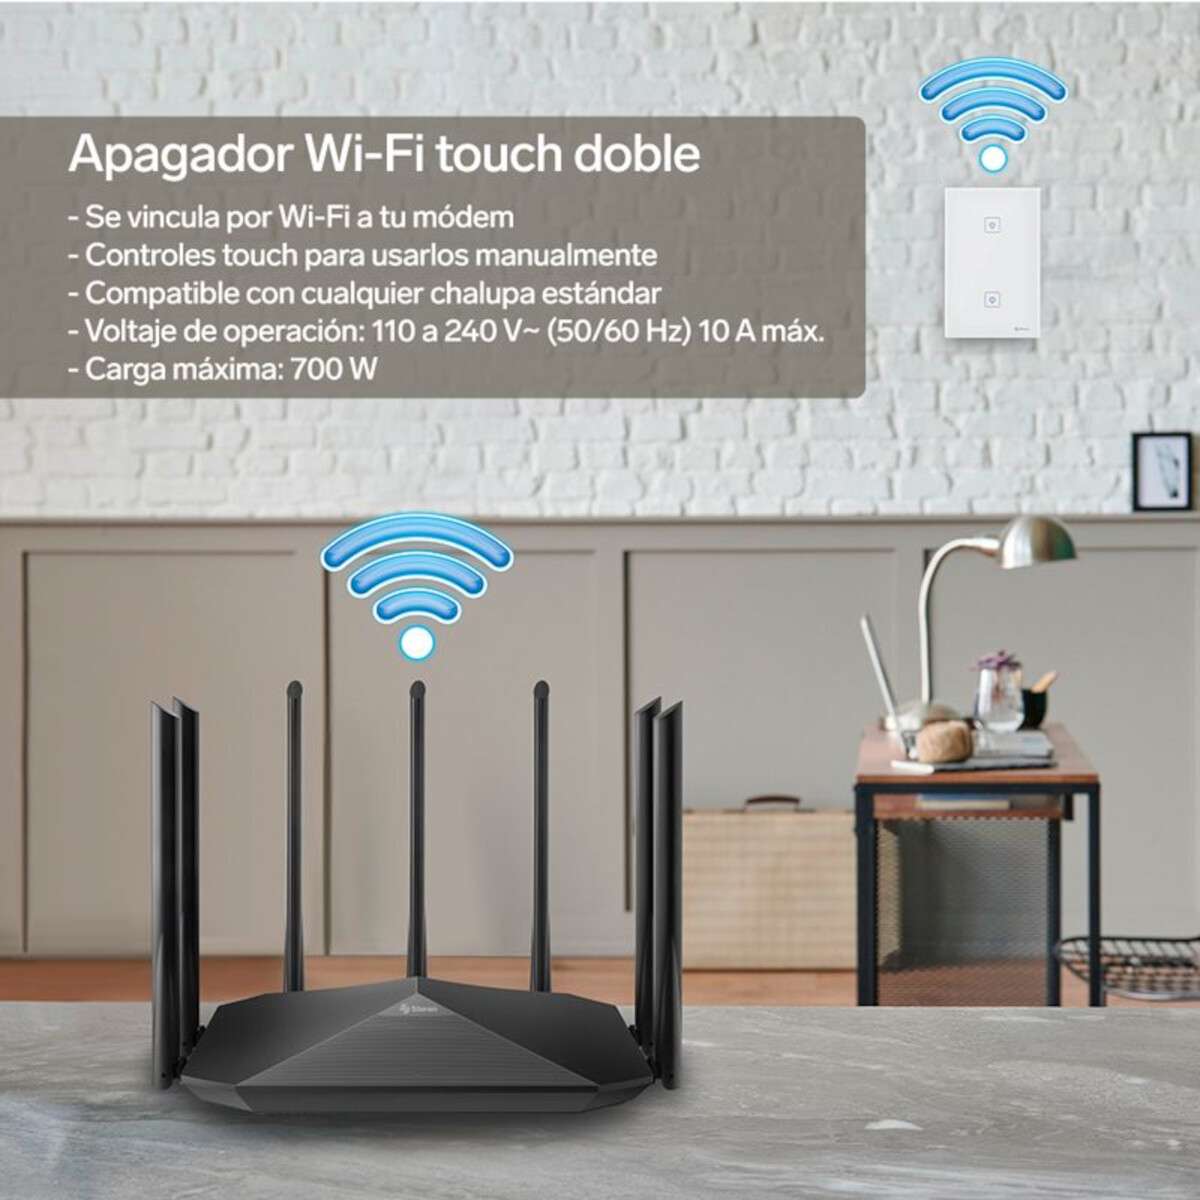 Apagador Wi-Fi touch doble SHOME-110 